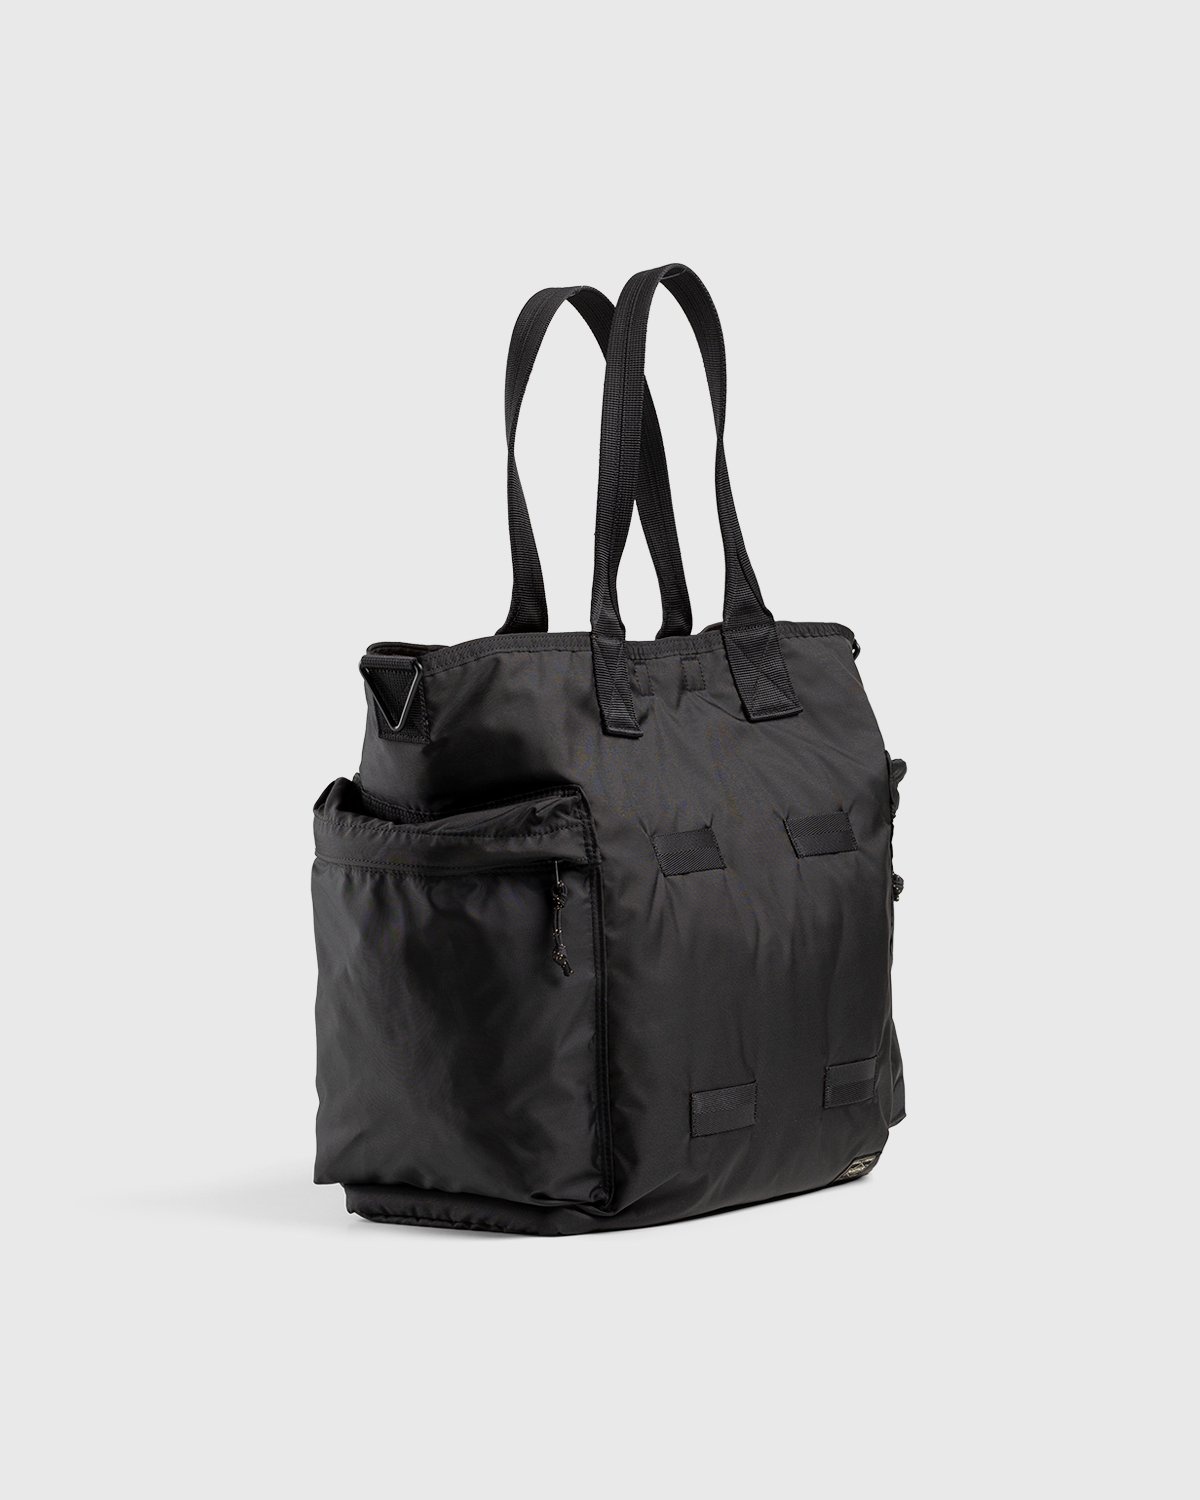 Porter-Yoshida & Co. – 2-Way Tote Bag Black - Bags - Black - Image 3